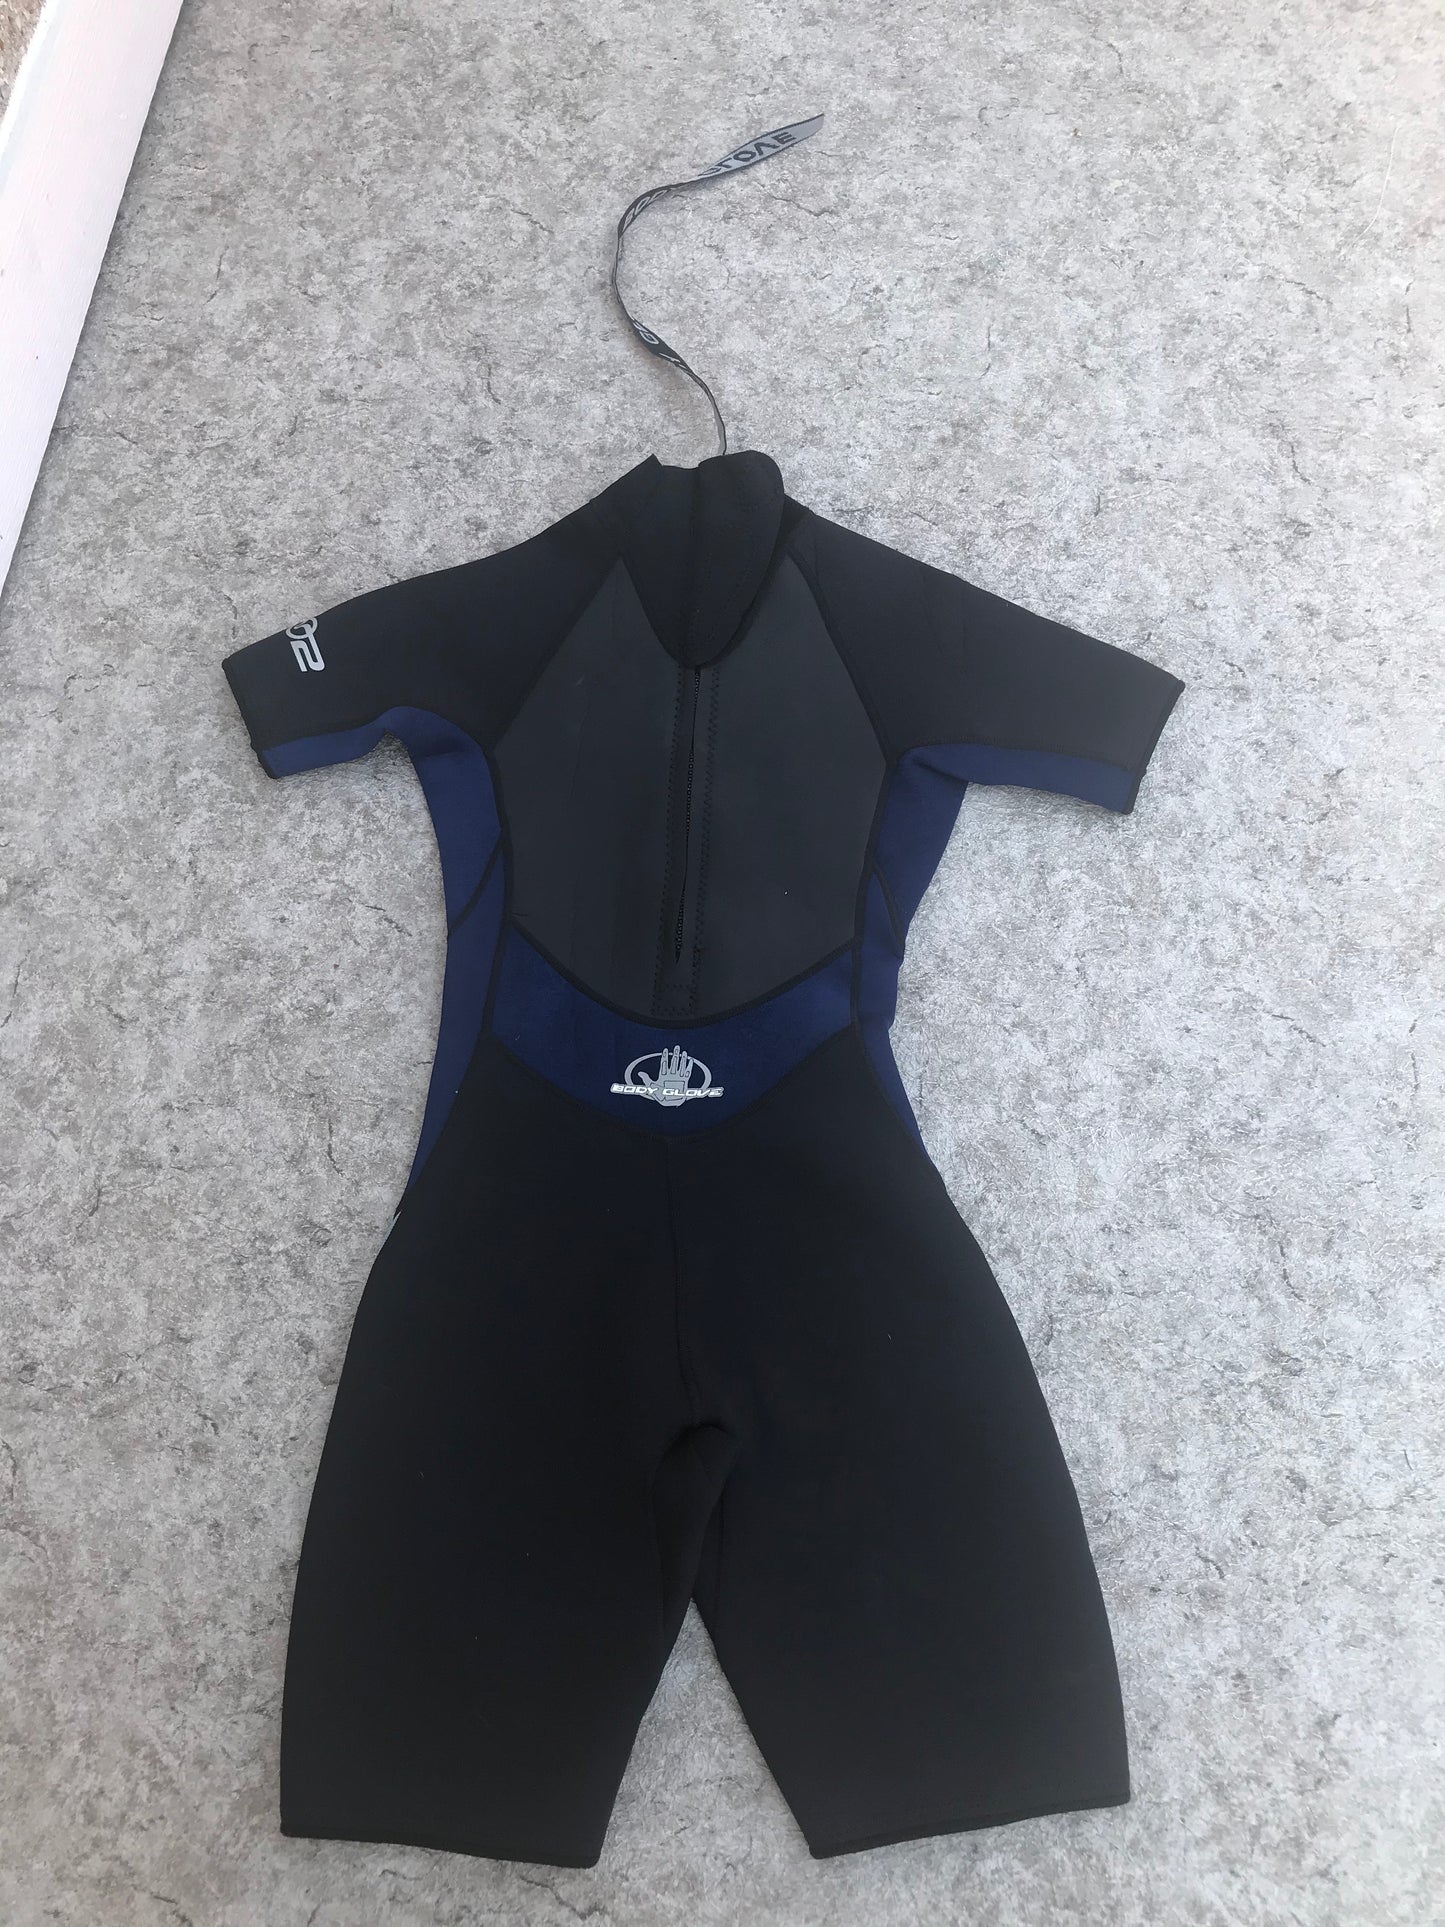 Wetsuit Ladies Size 7-8 Body Glove 2-3 mm Blue Black Neoprene Excellent